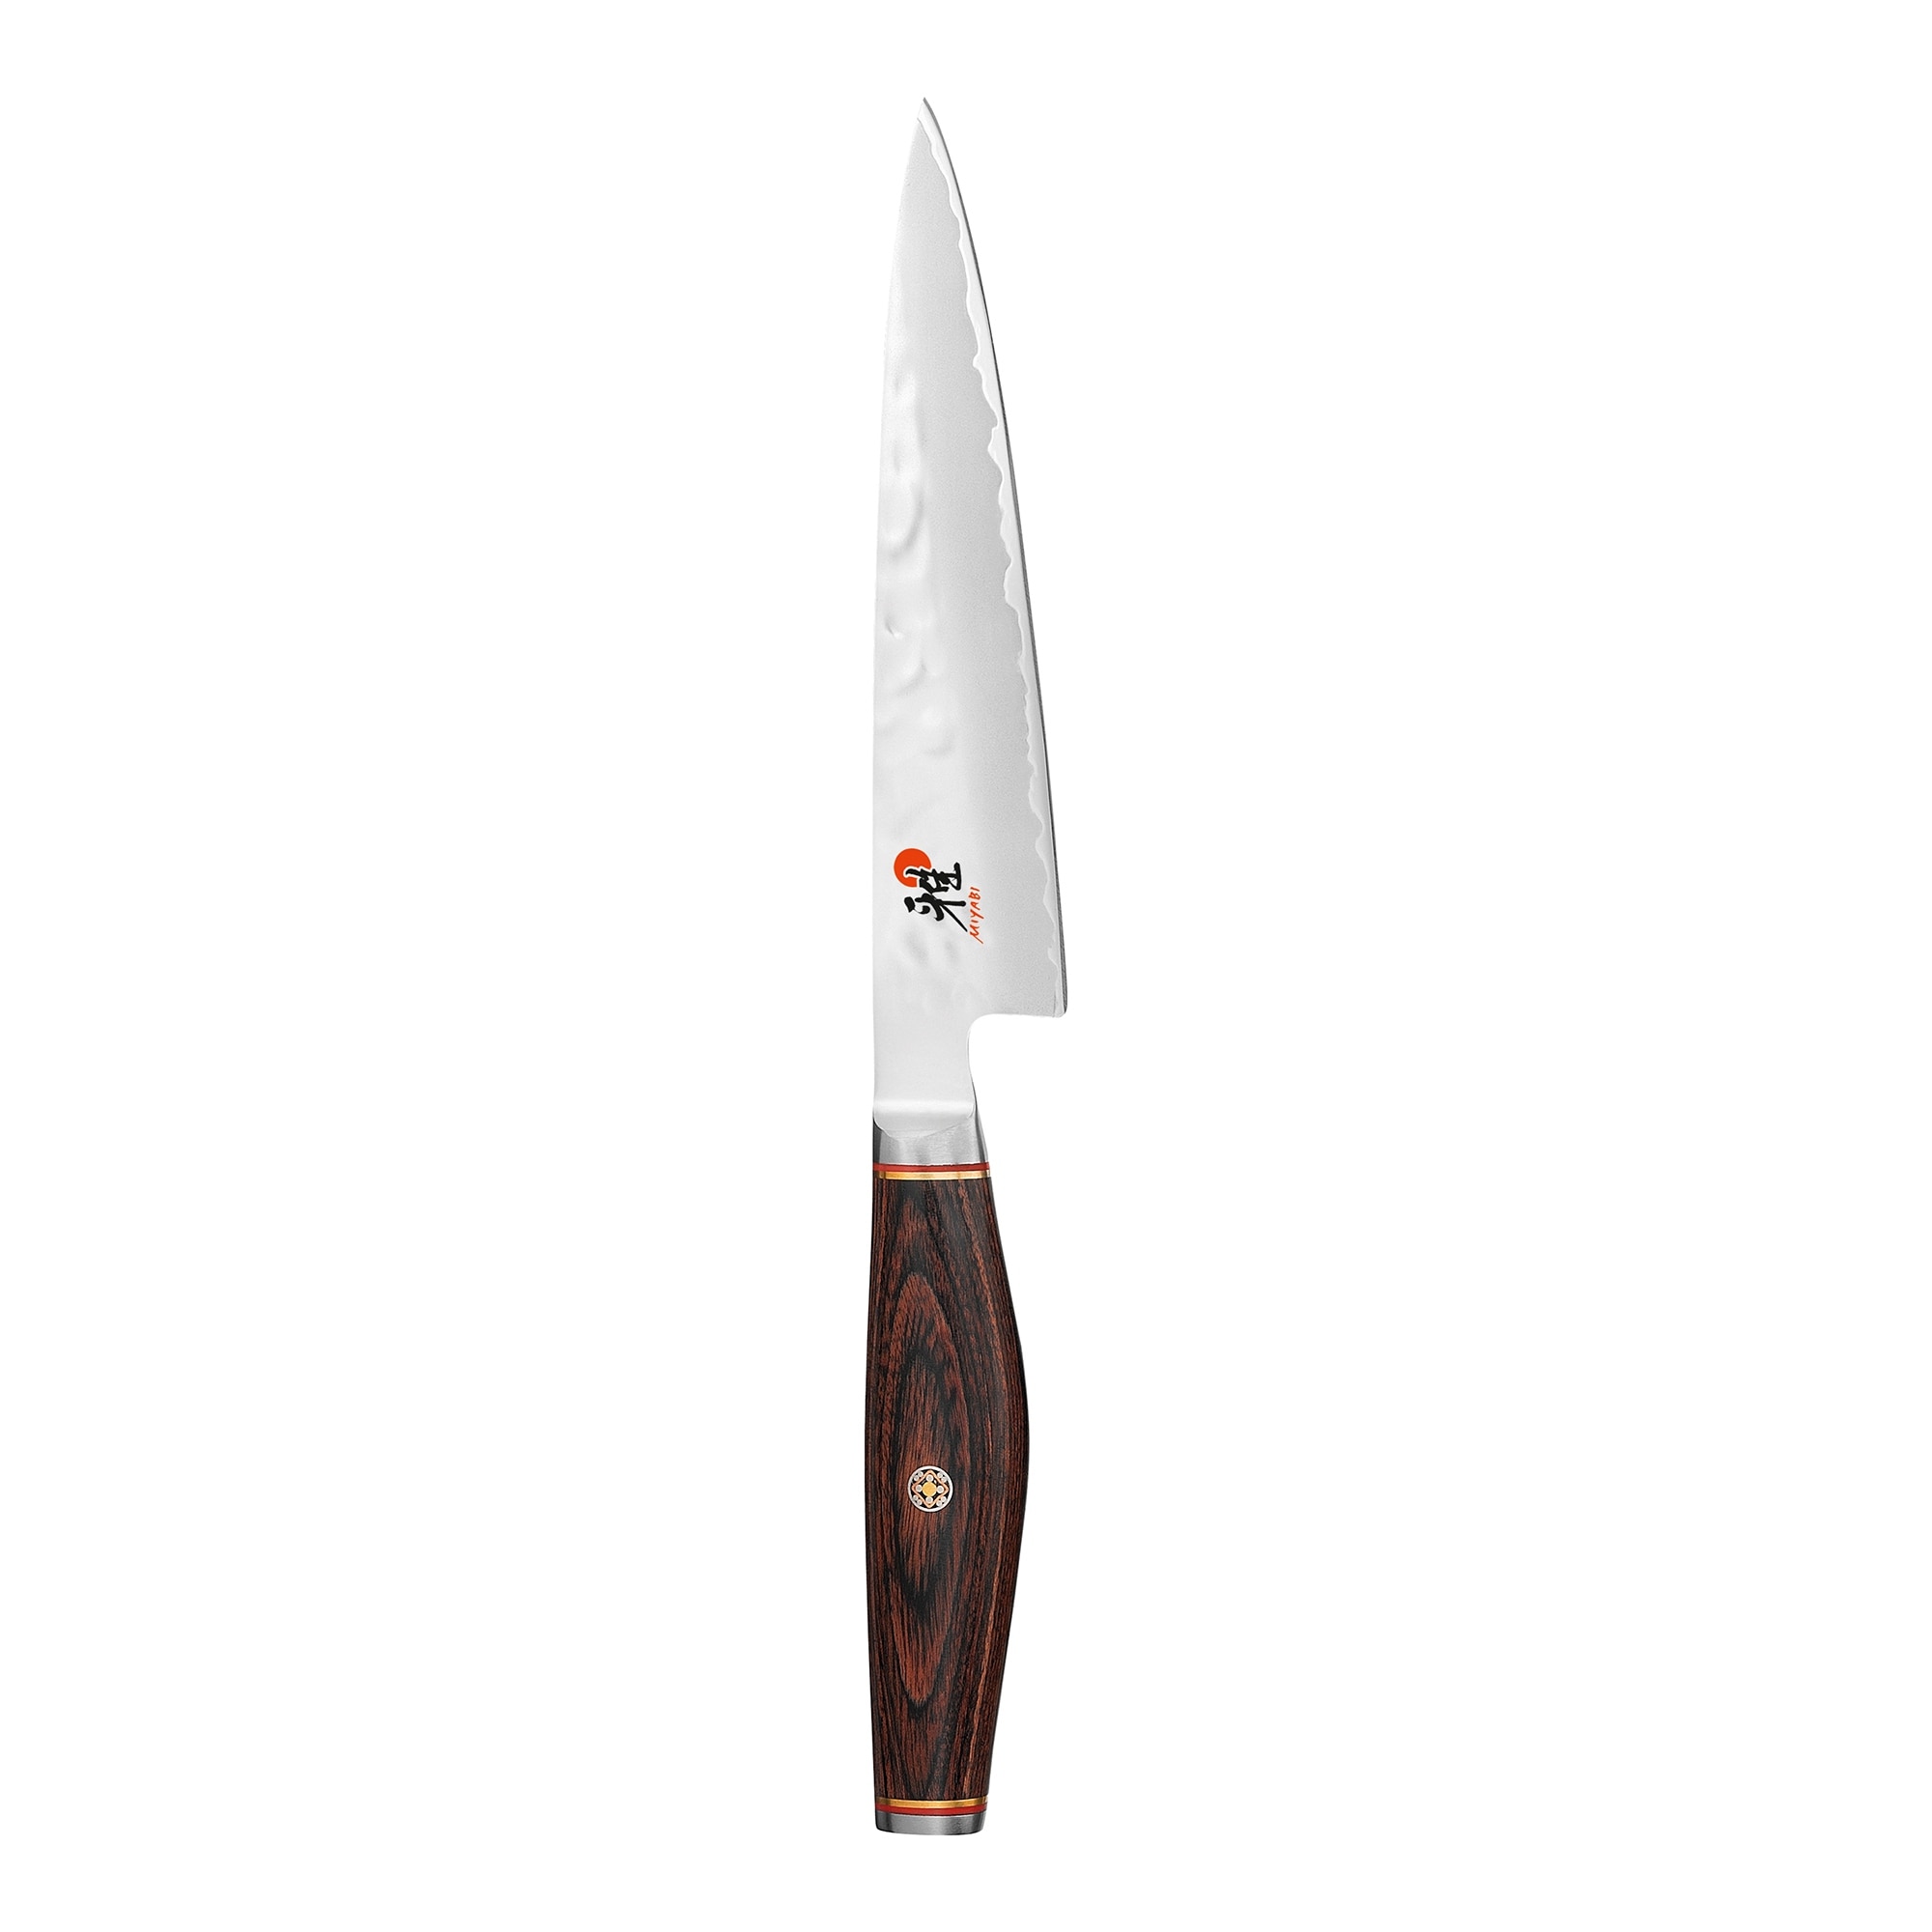 Miyabi Artisan - 9.5 Chef's Knife - SG2 Powdered Steel - Made in